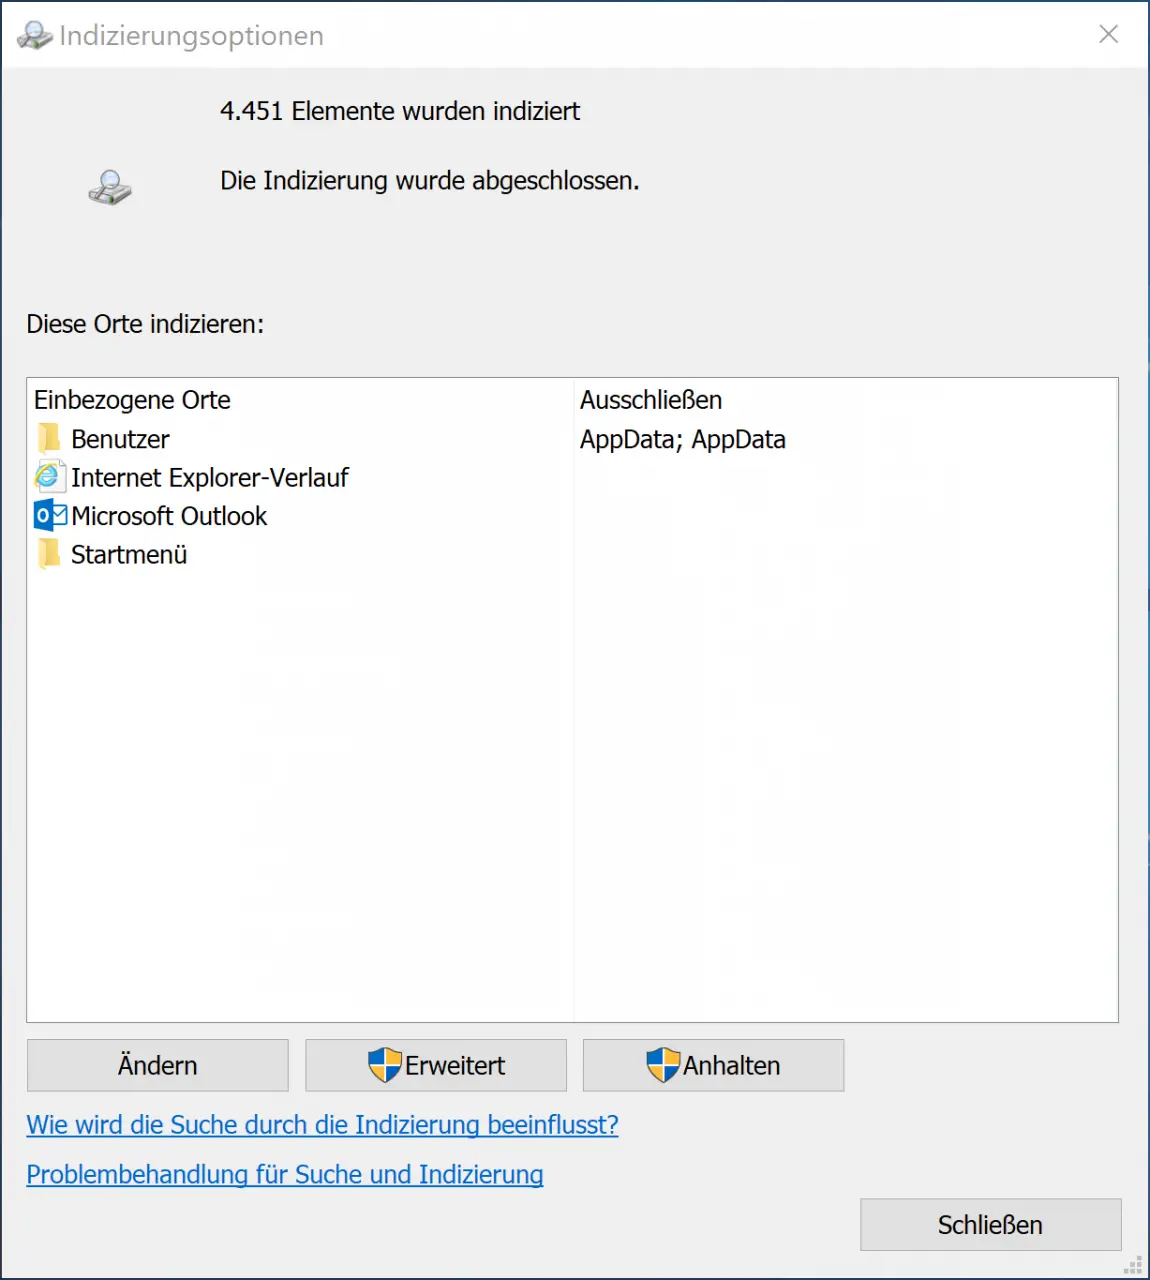 Windows 10 initiation options